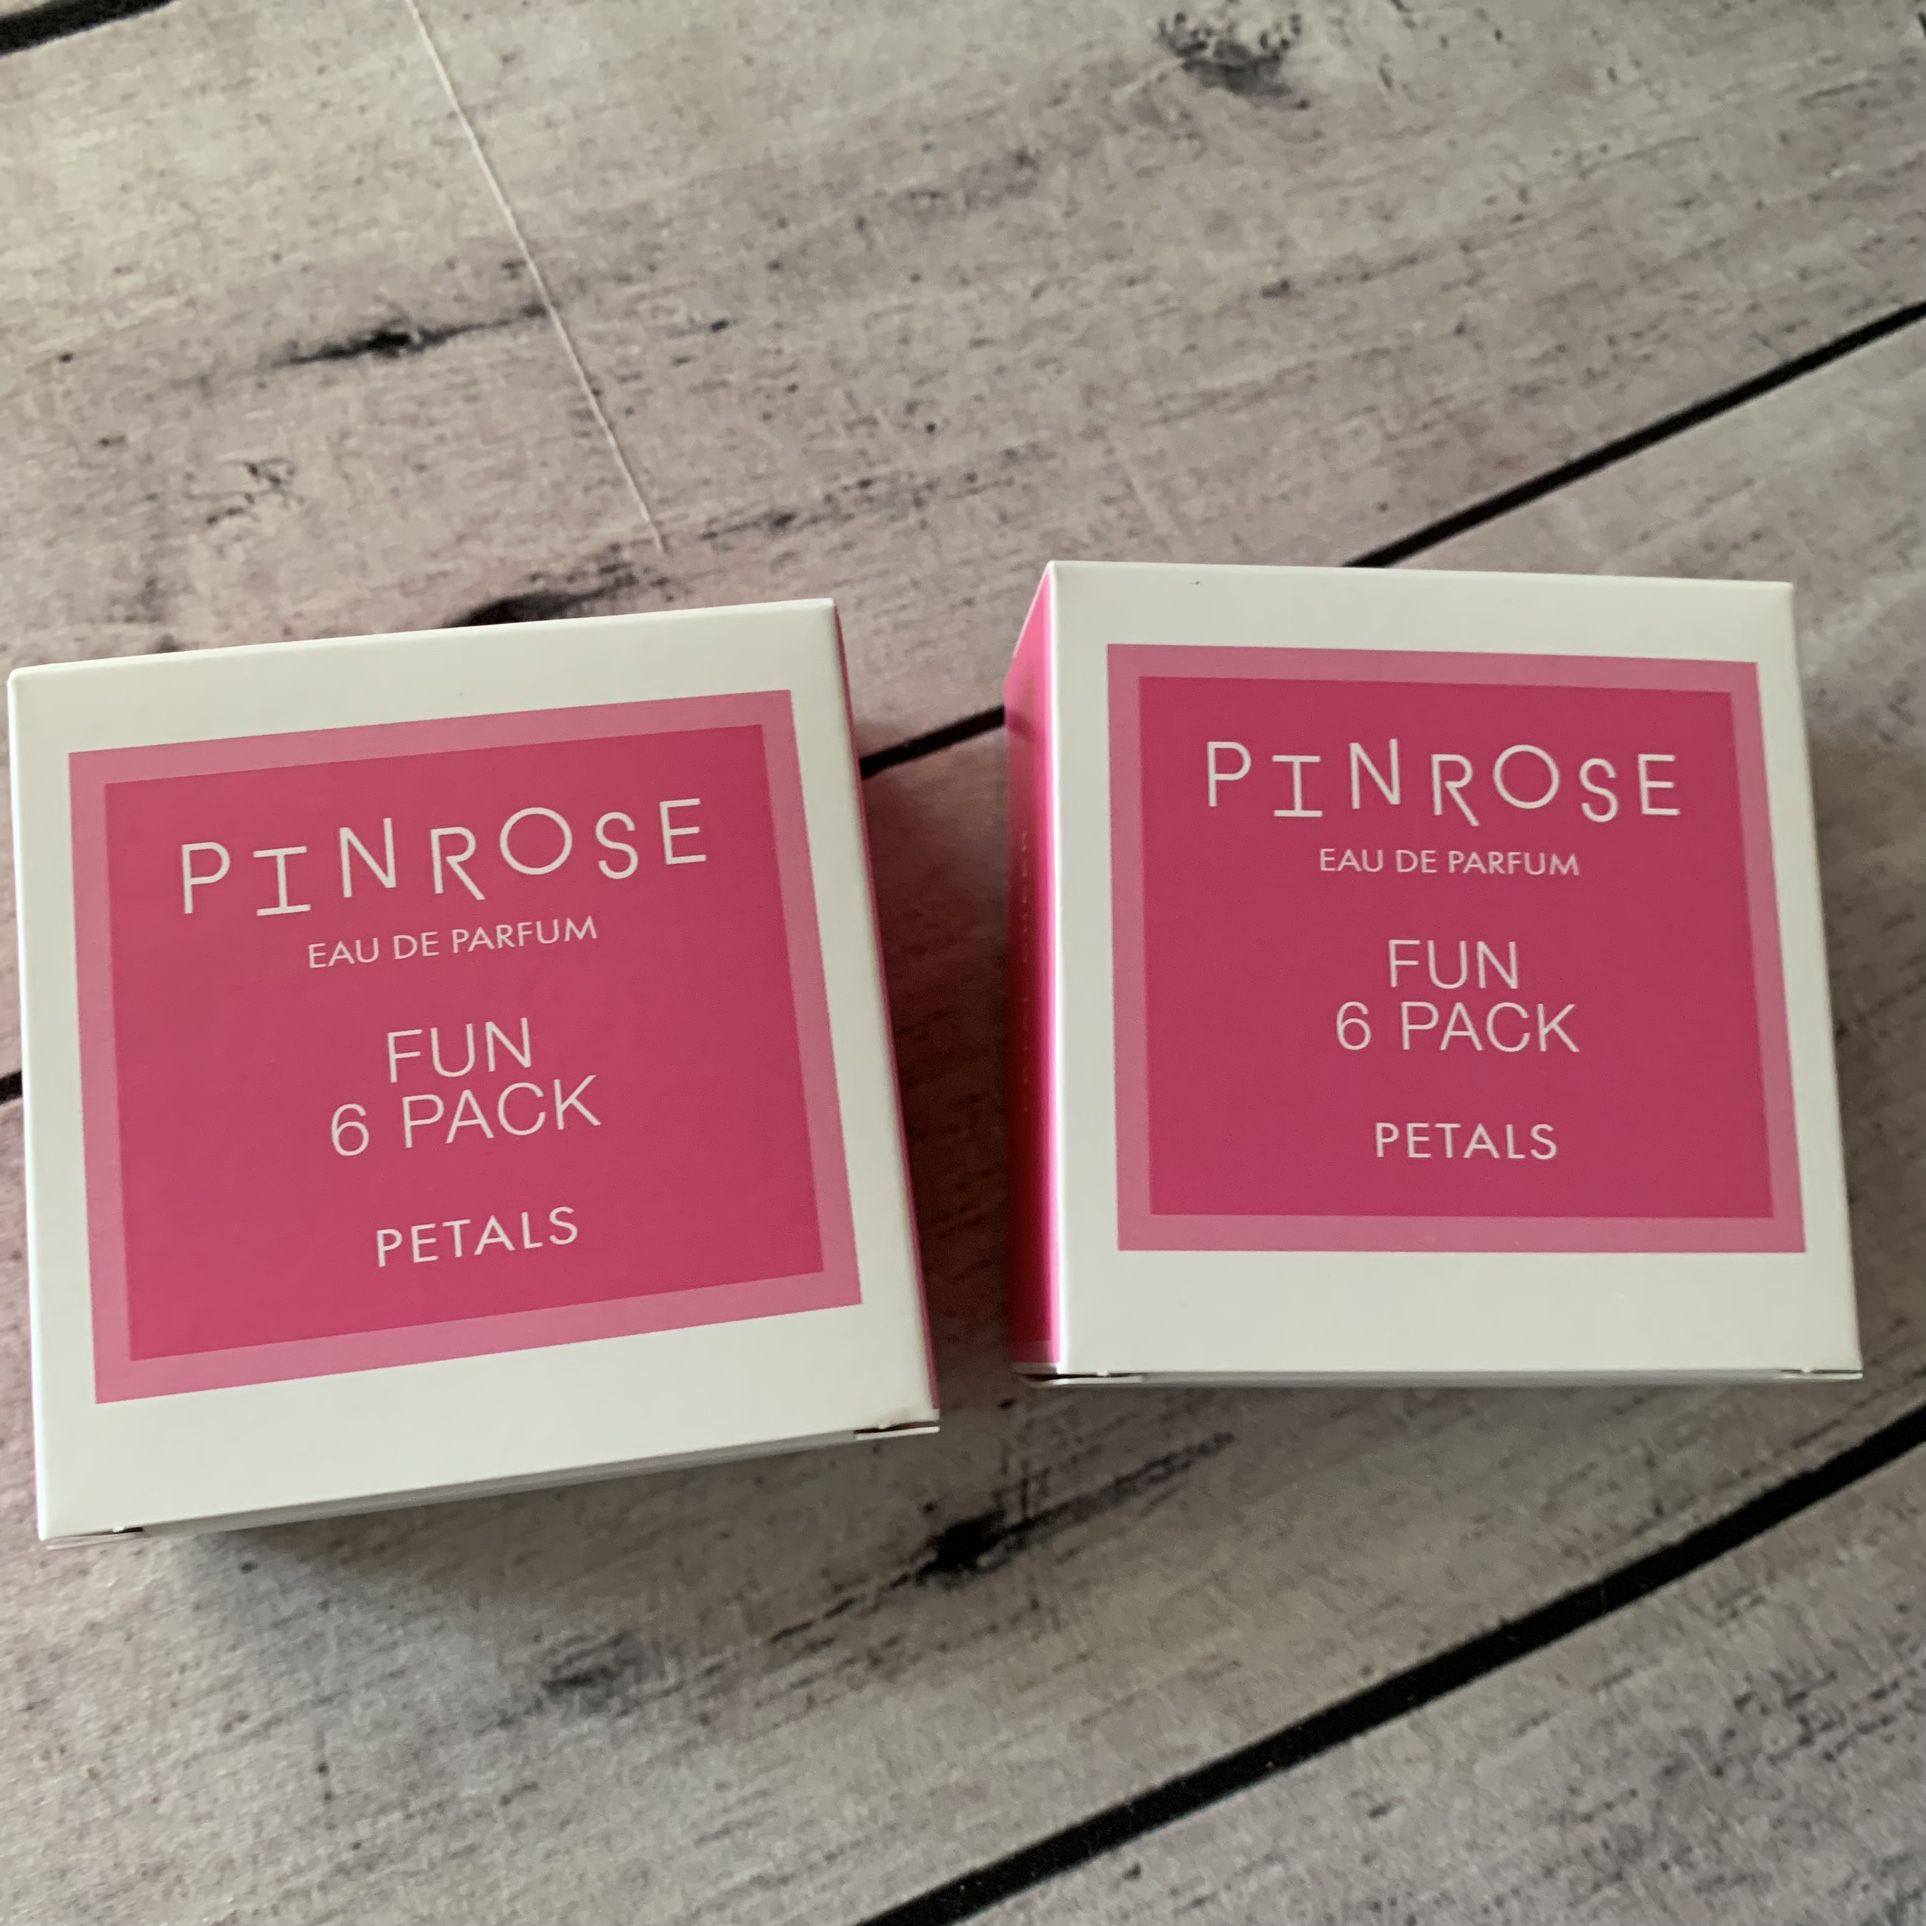 2x New Pinrose Eau De Parfum Fun 6 Pack Petals - 6 Single Use Perfume Towelettes